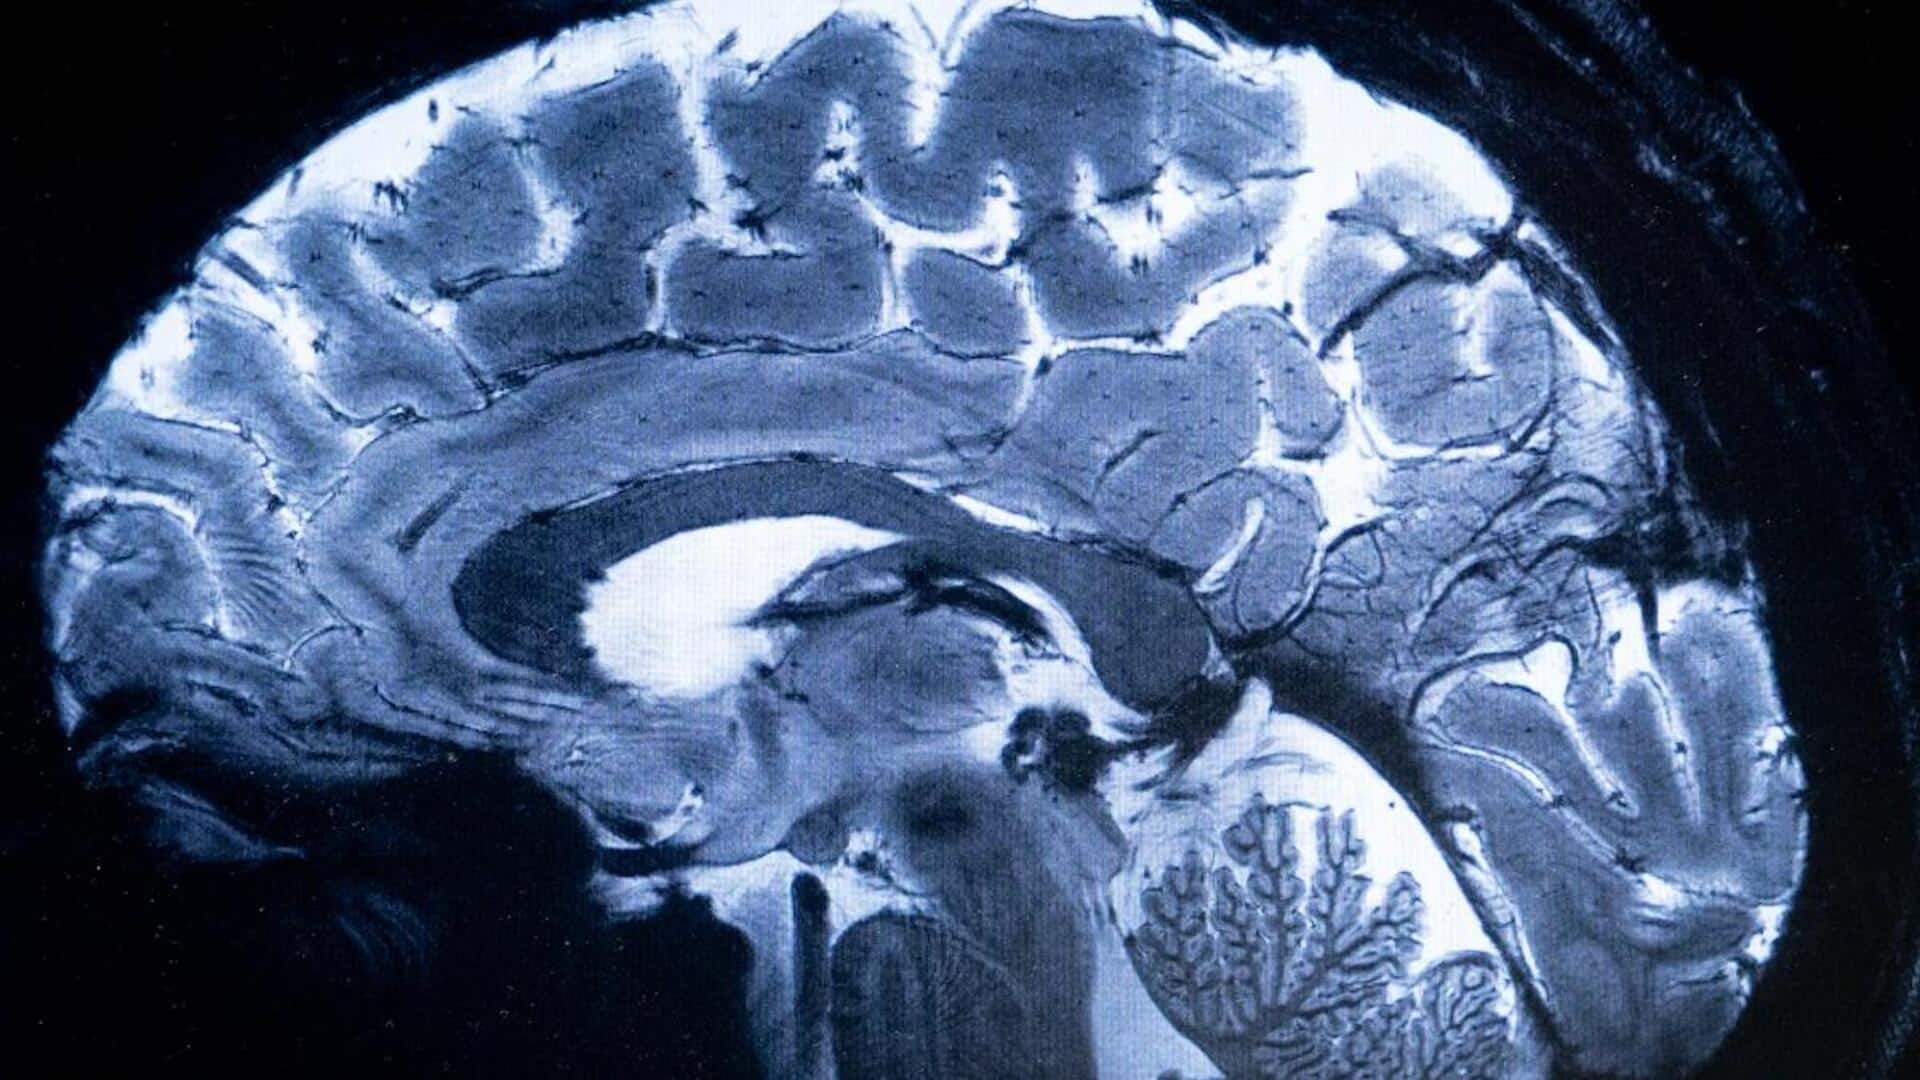 Groundbreaking MRI scanner captures first images of human brain